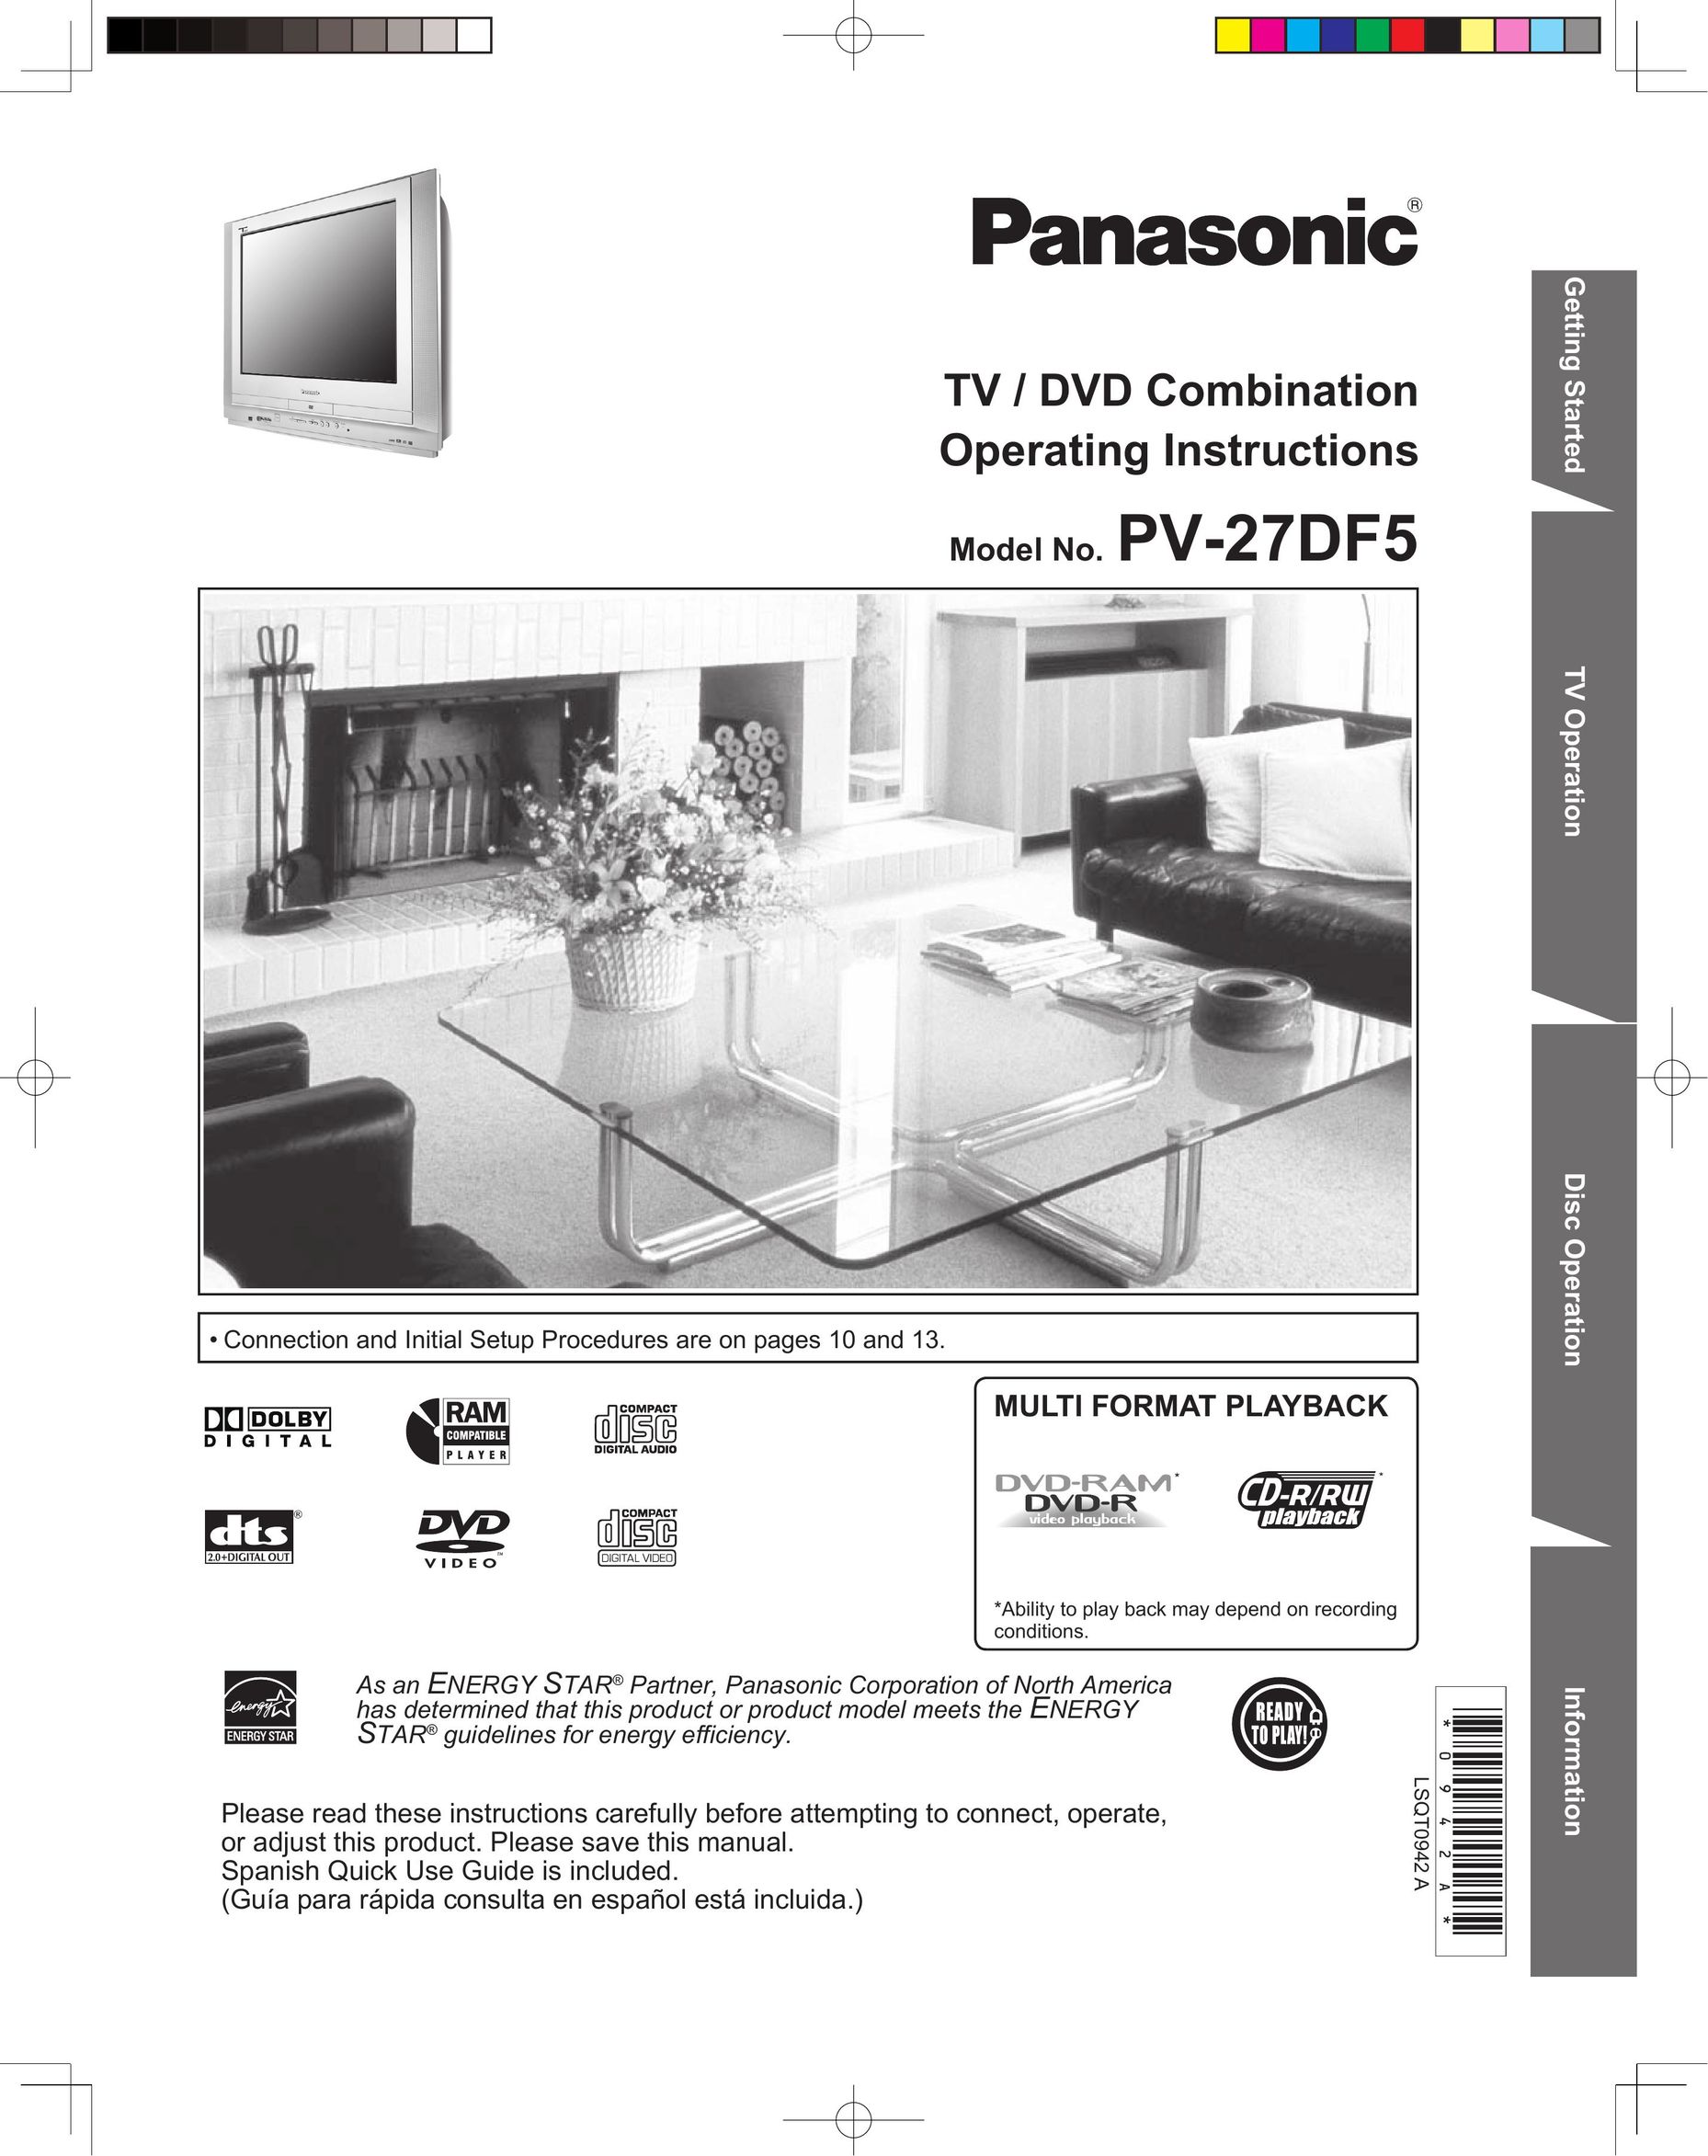 Panasonic PV-27DF5 TV DVD Combo User Manual